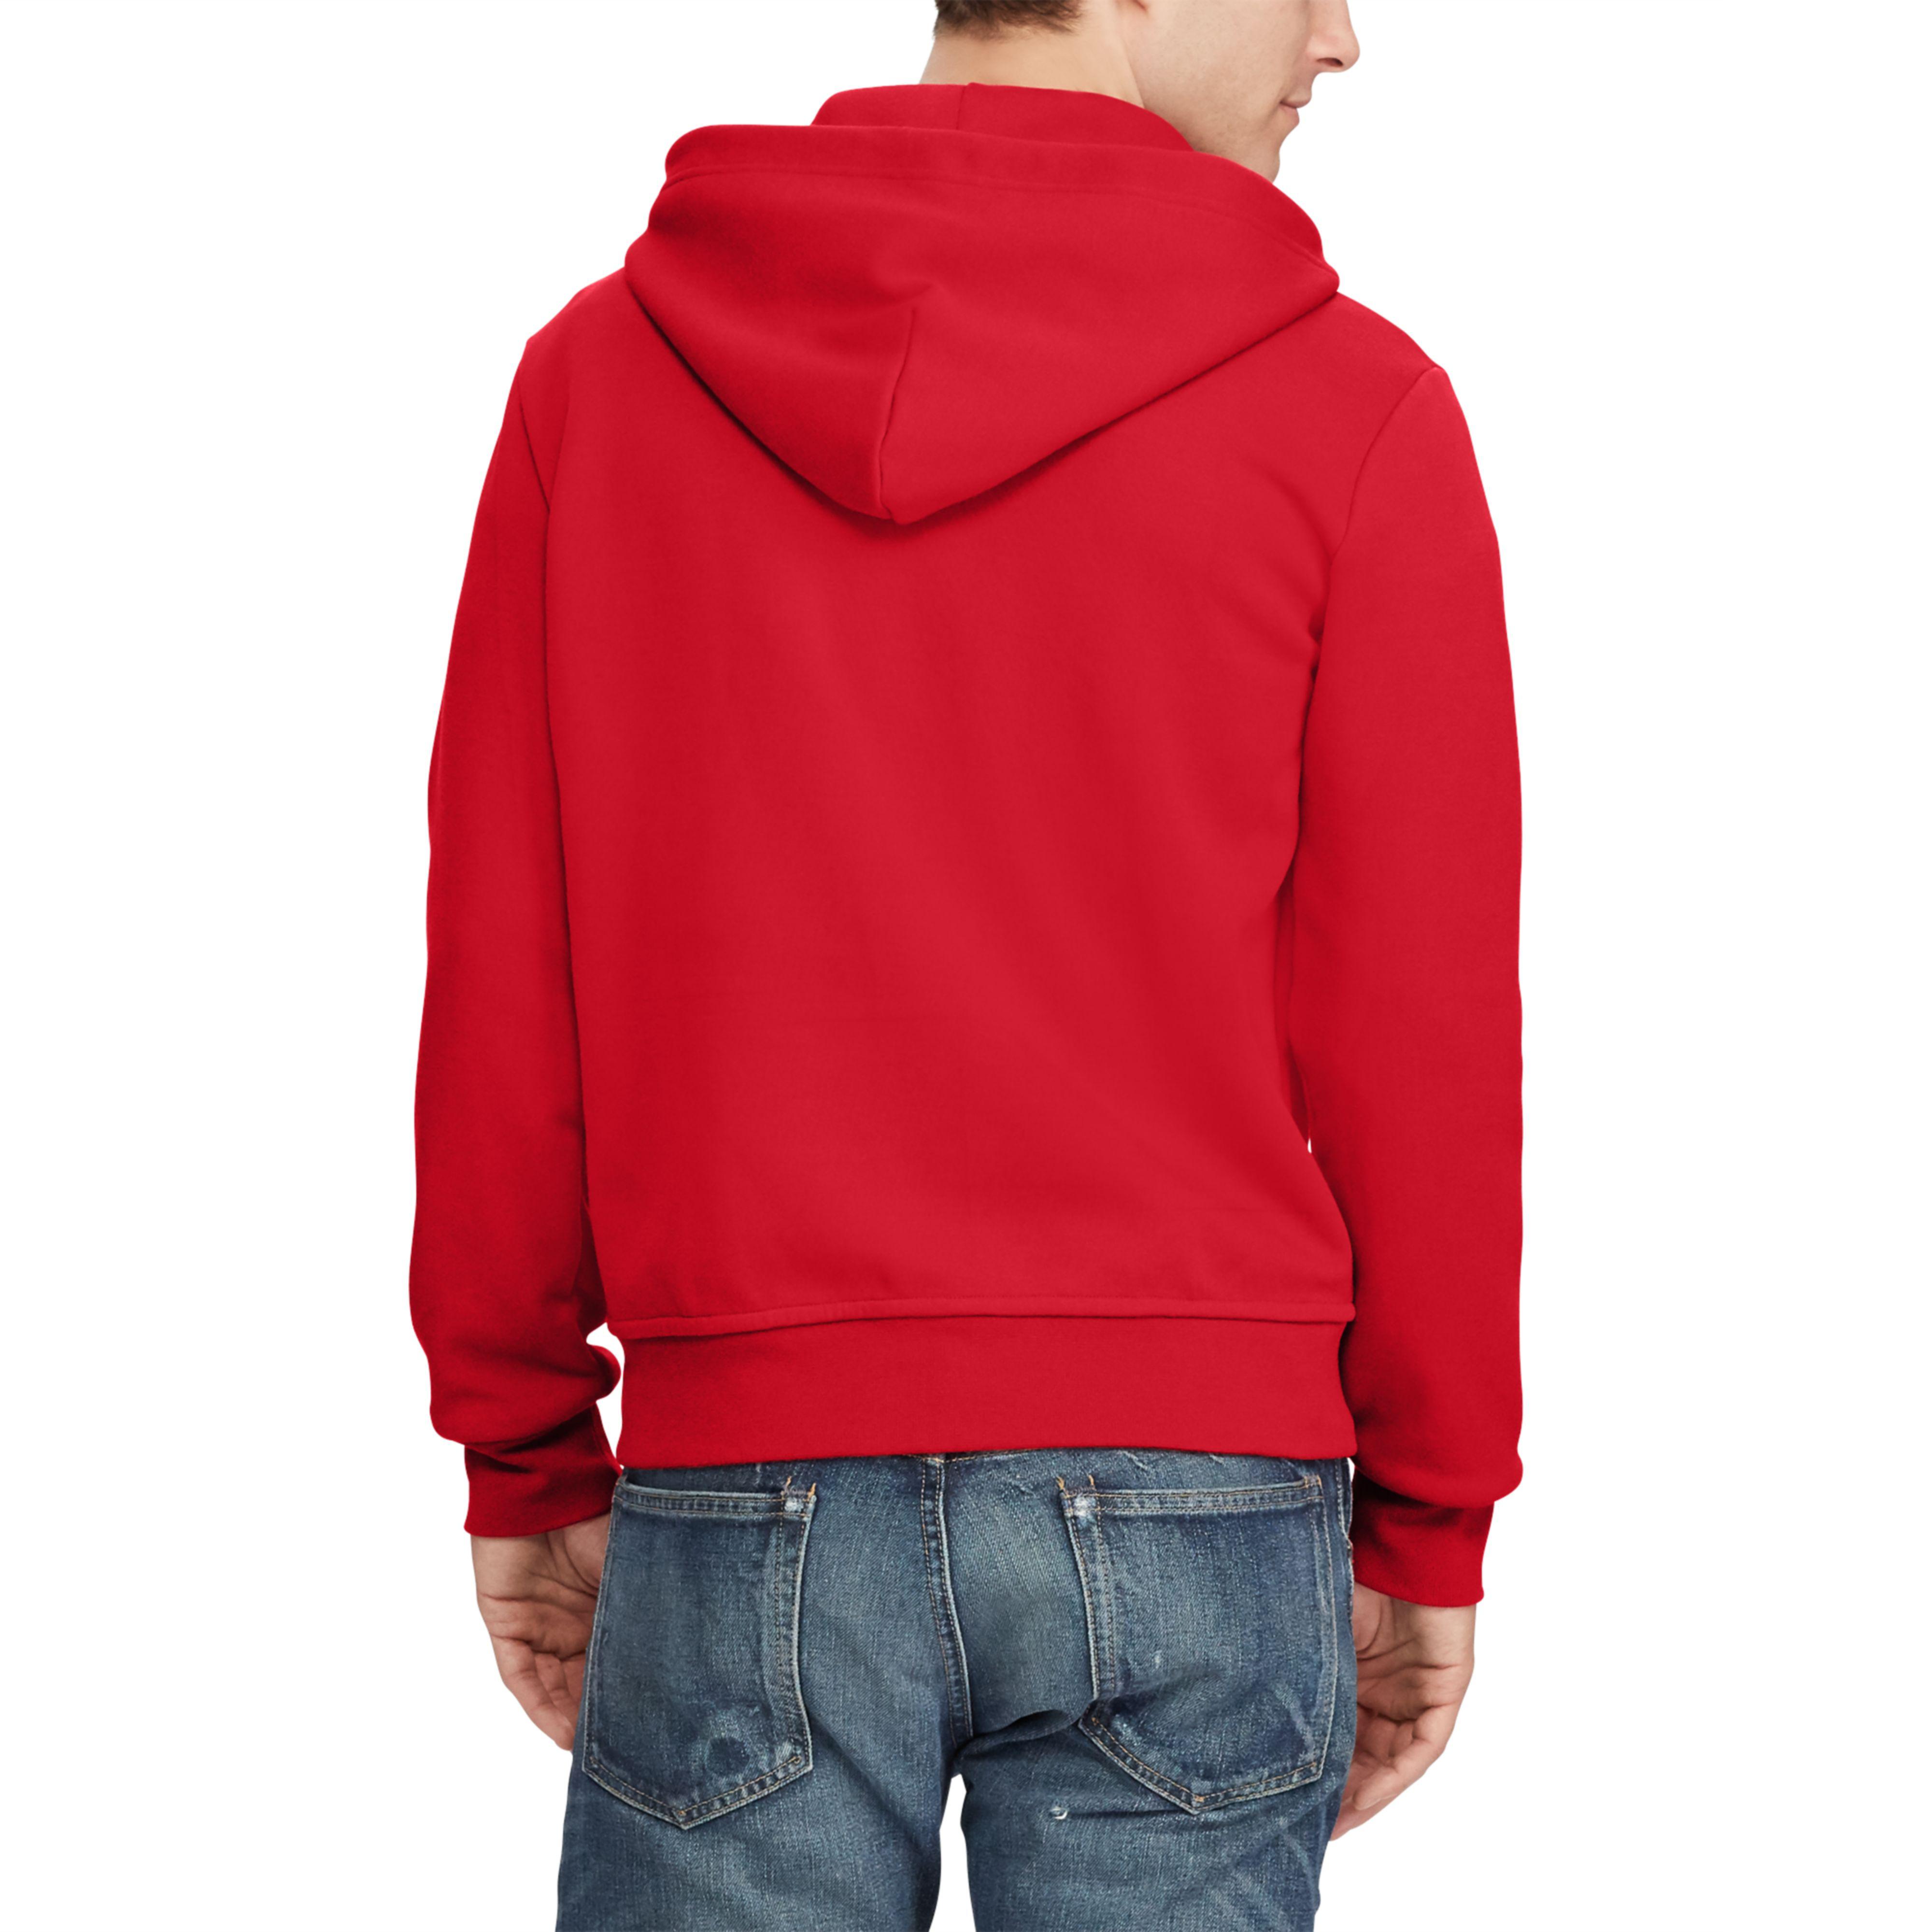 Lyst - Polo Ralph Lauren Double-knit Full-zip Hoodie in Red for Men